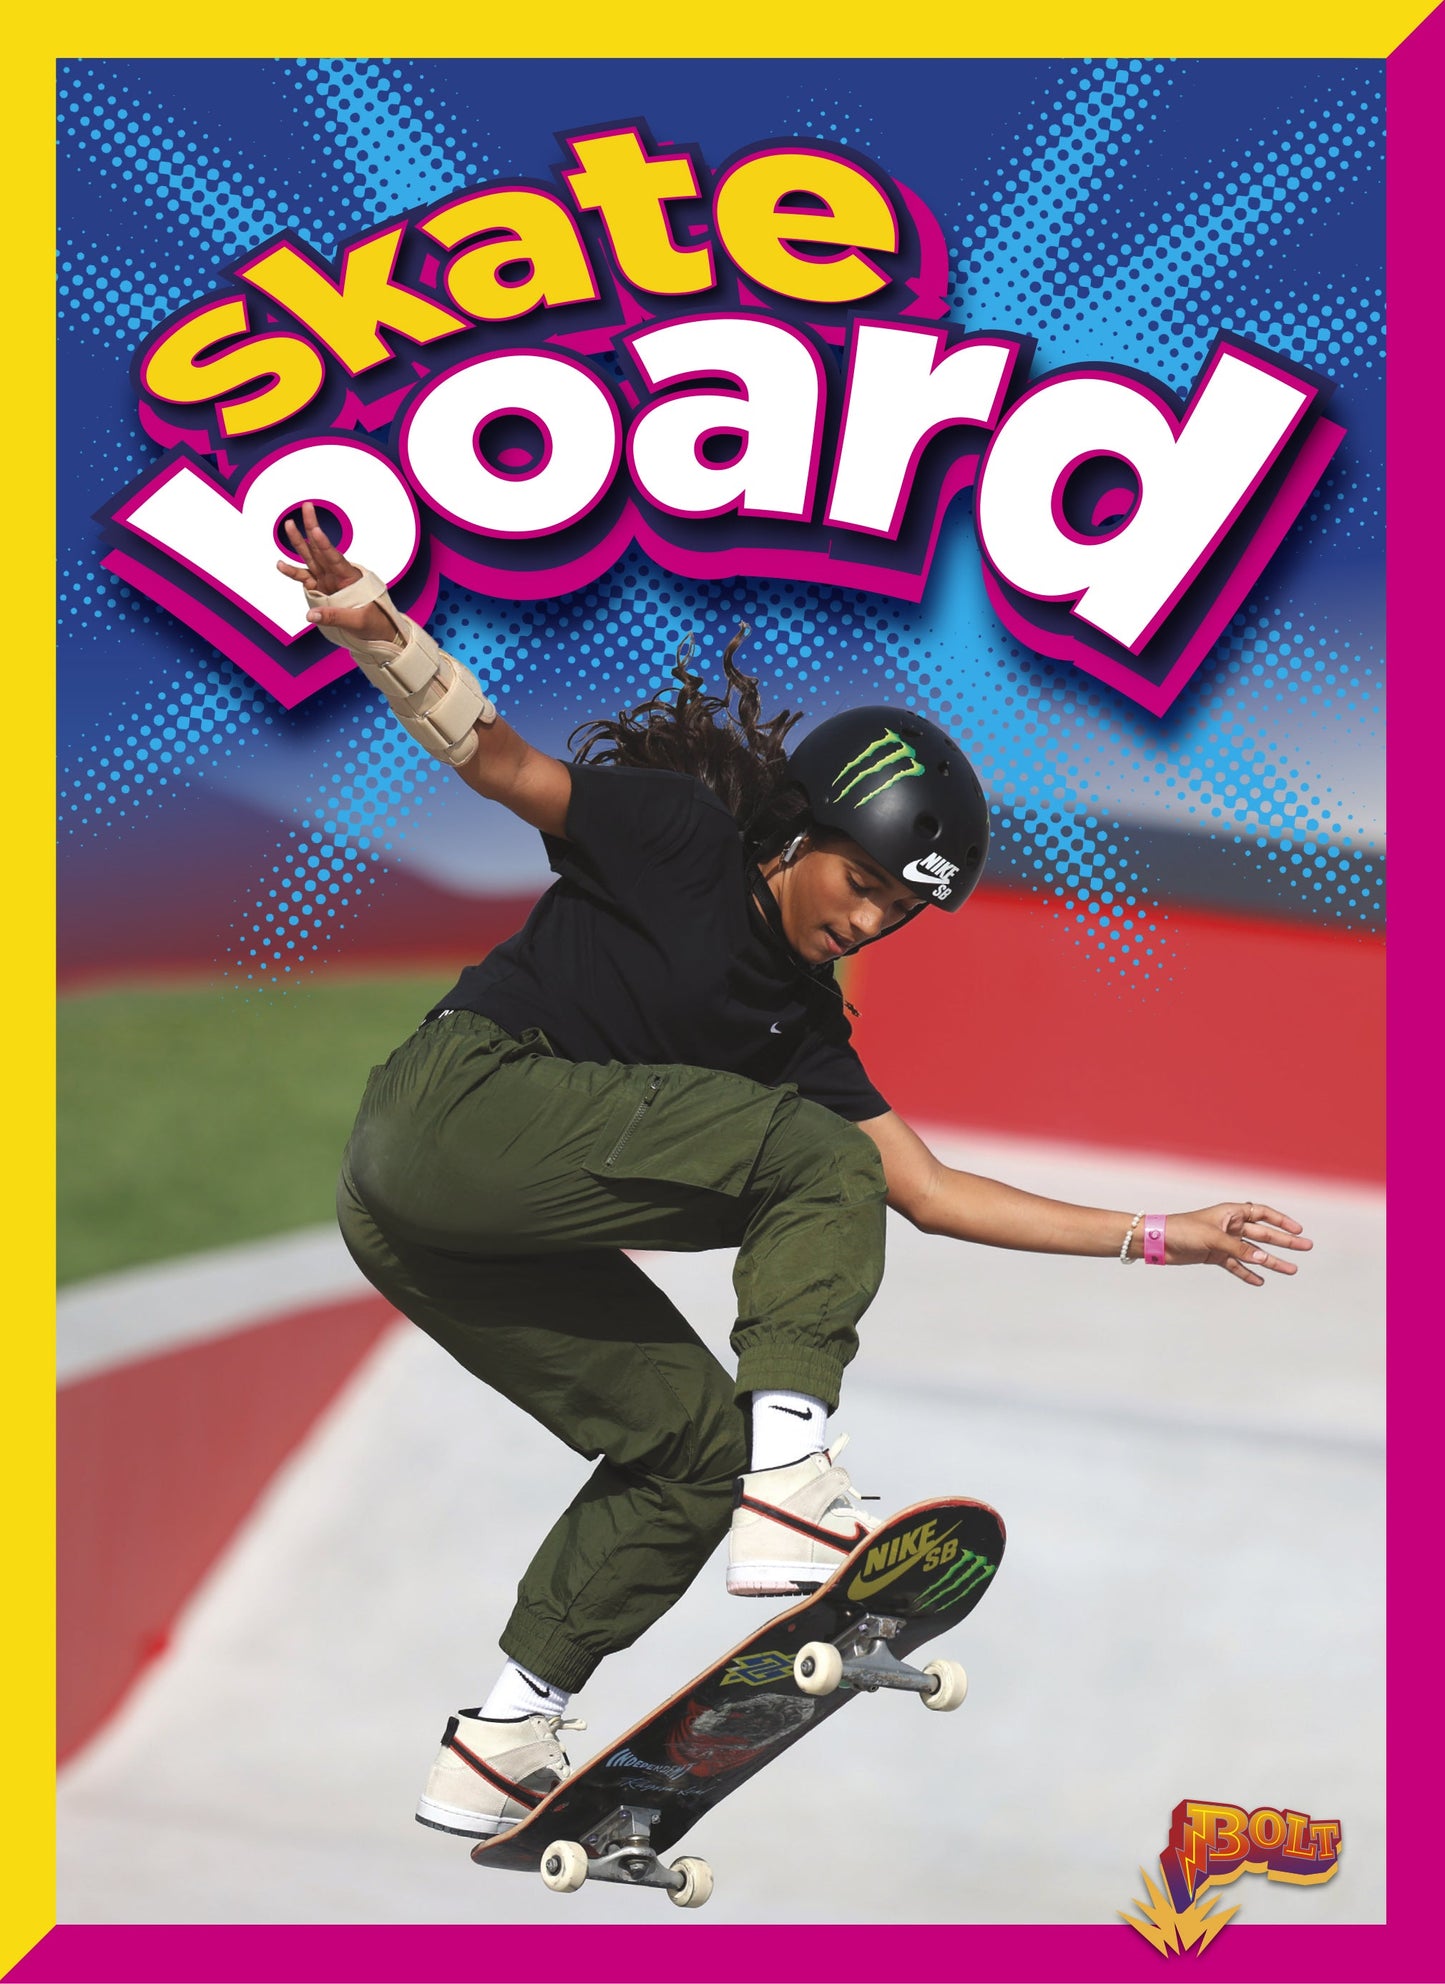 Deportes extremos: Skateboard